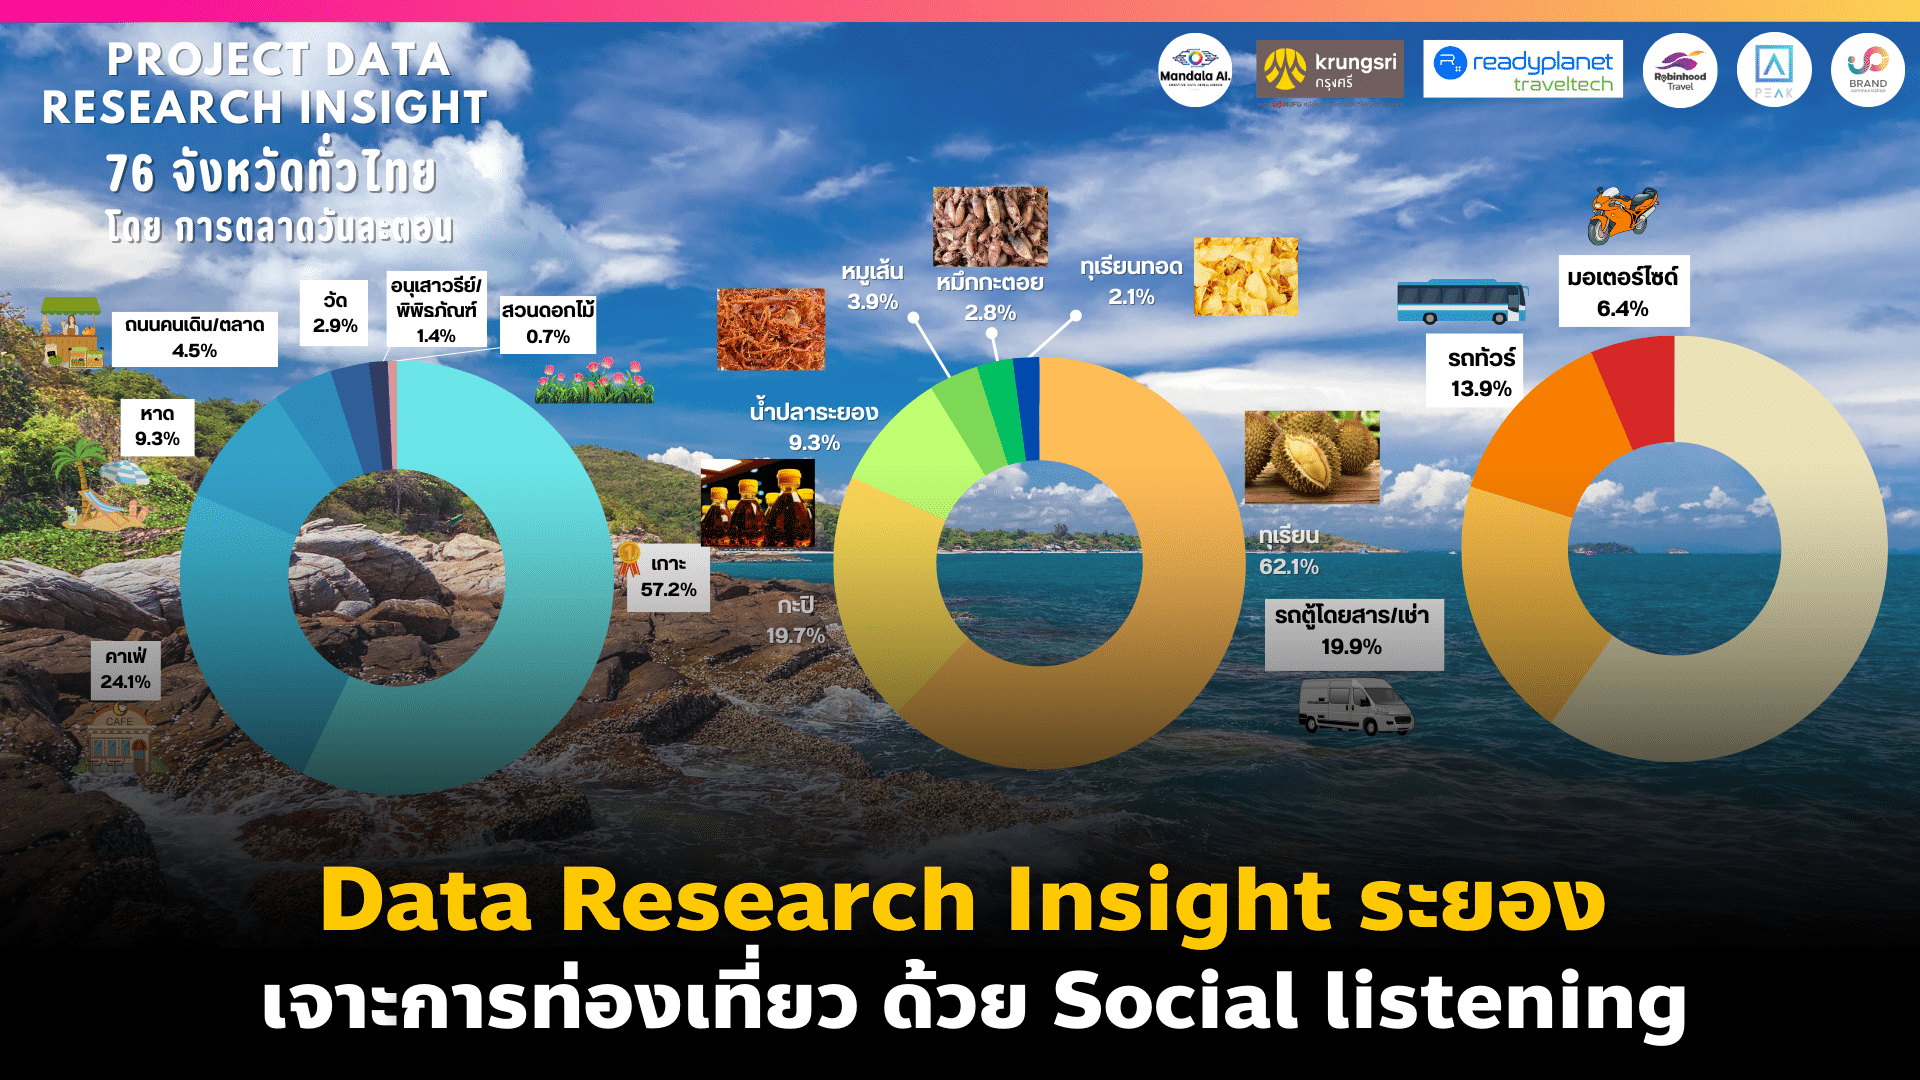 Data Research Insight ระยอง เจาะการท่องเที่ยว ด้วย Social listening